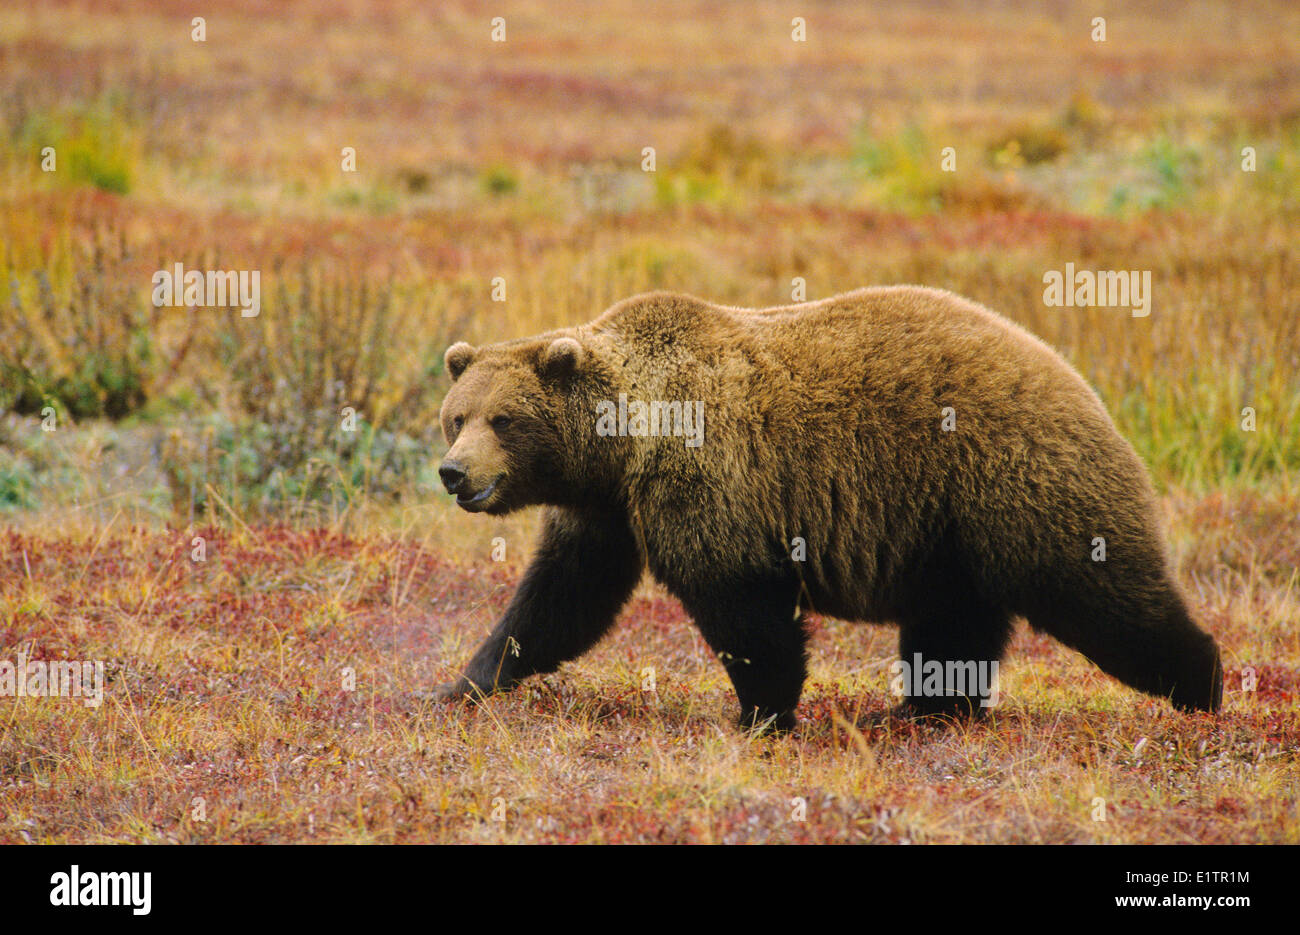 Grizzly Bear (Ursus arctos horribilis) Adult crossing Tundra Autumn, Denali National Park, Alaska, United States of America. Stock Photo